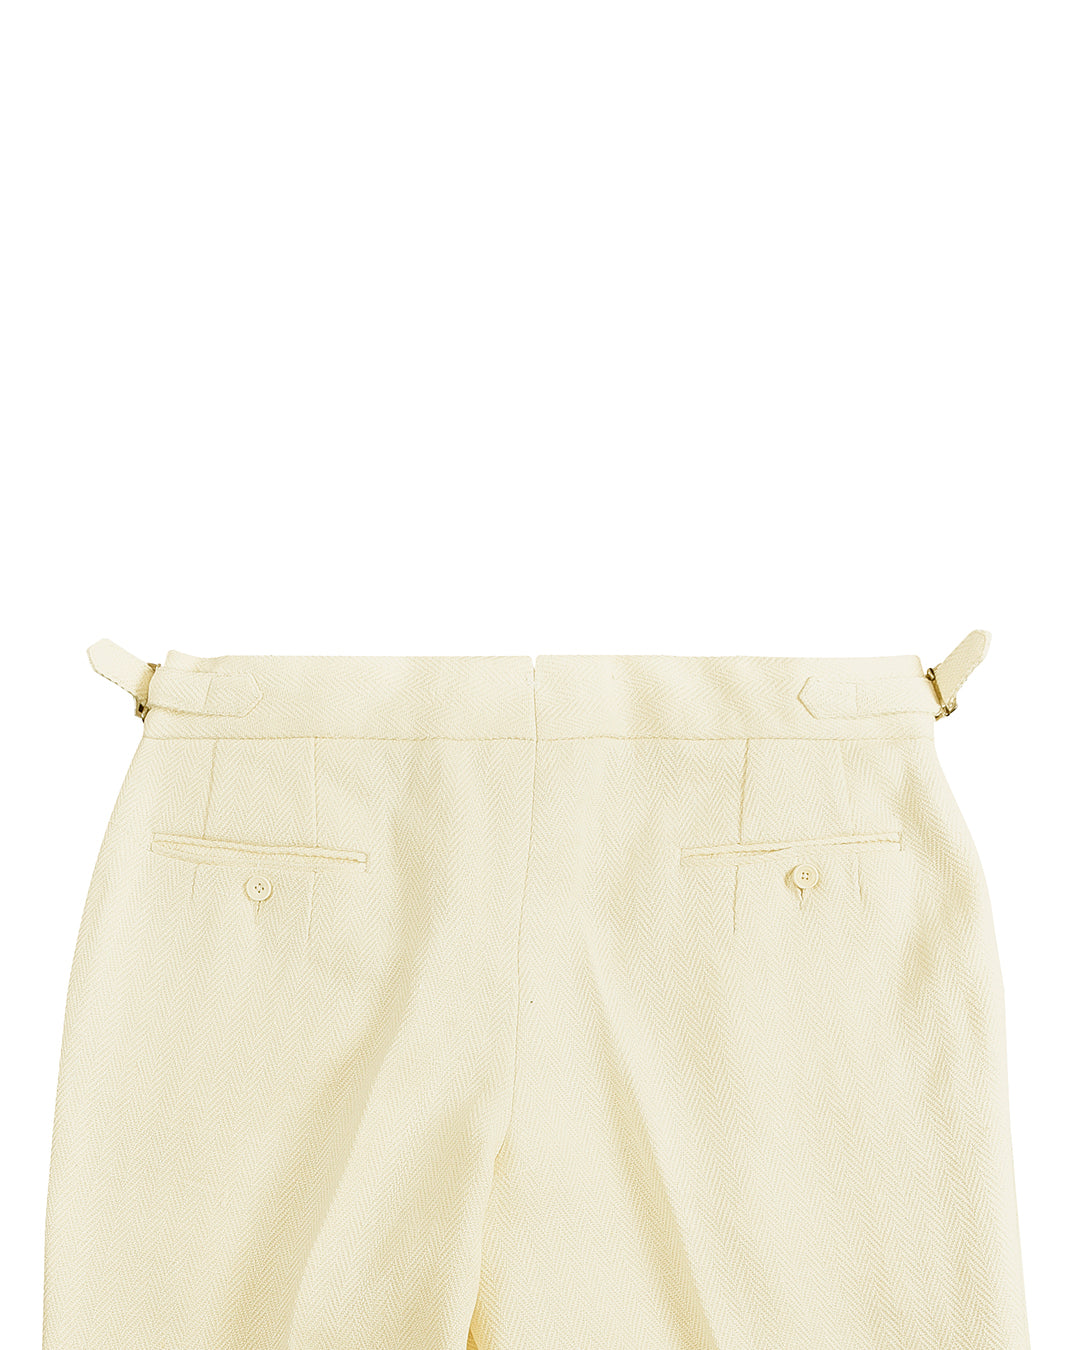 Back view of custom linen pants for men by Luxire in cream herringbone